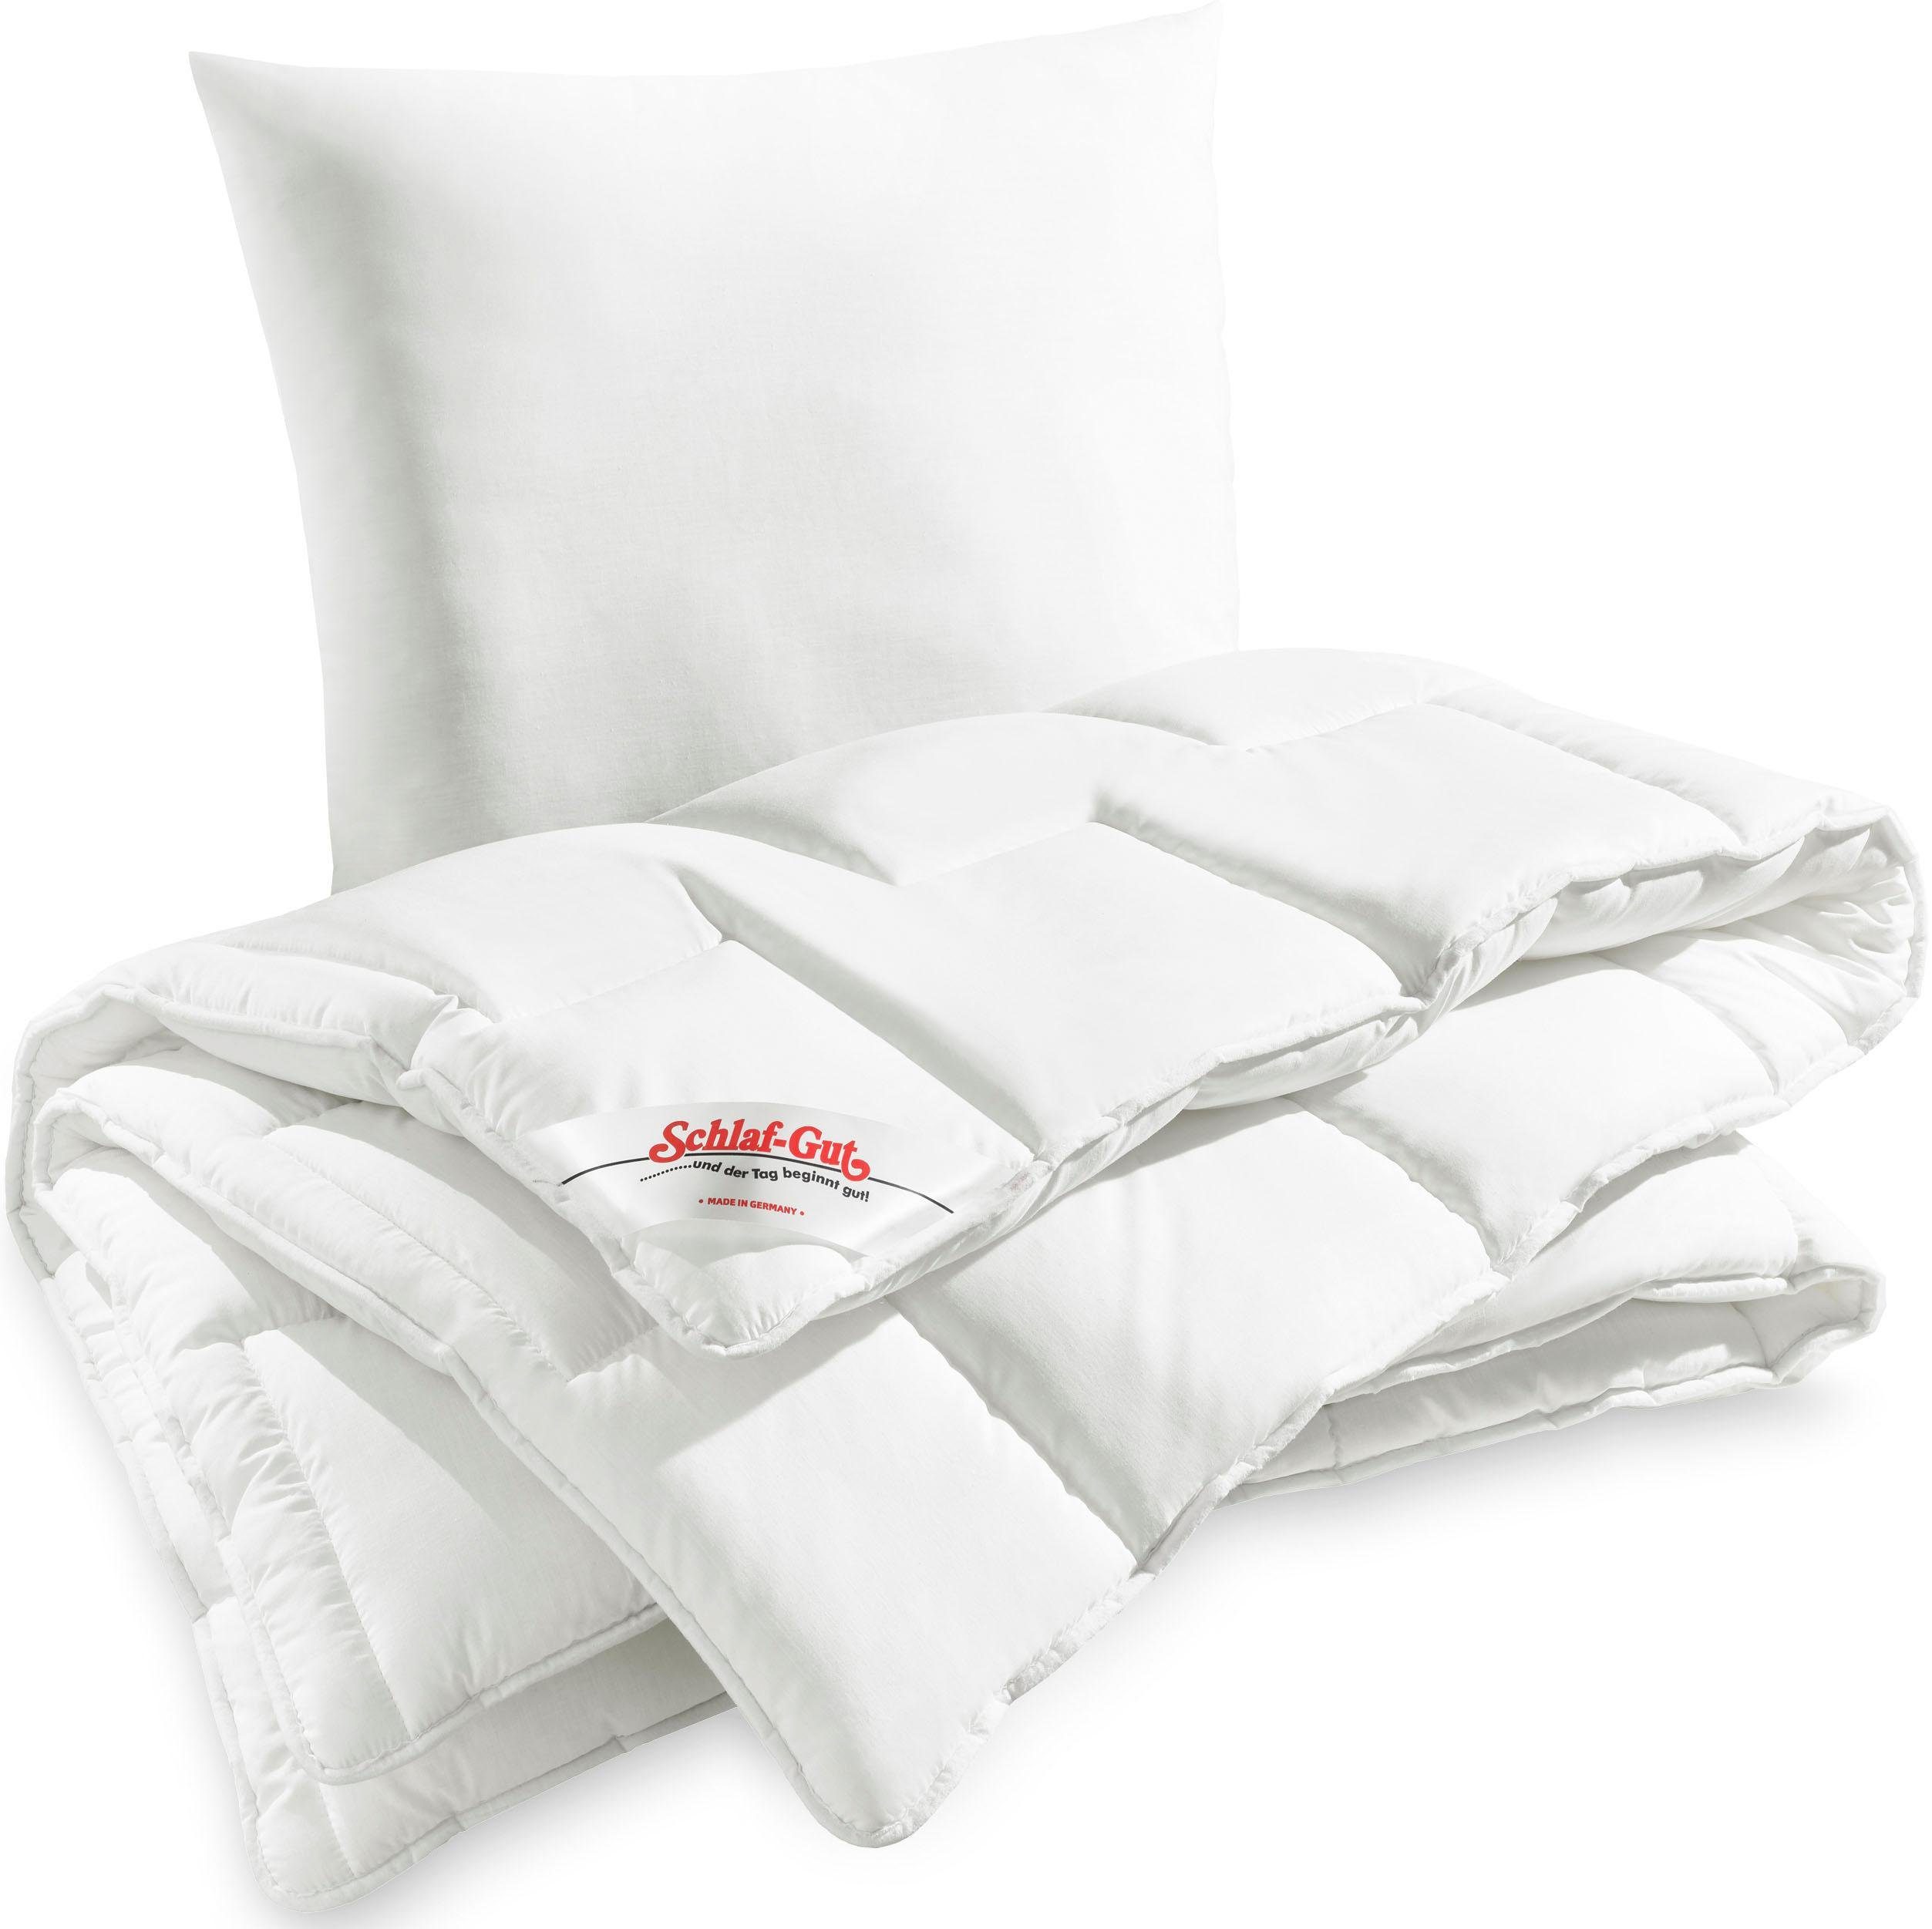 Bettdecke + Kopfkissen, Utah, Füllung: 50% Bezug: Schlaf-Gut Baumwolle, Polytherm®, Schlaf-Gut, 50% Polyester